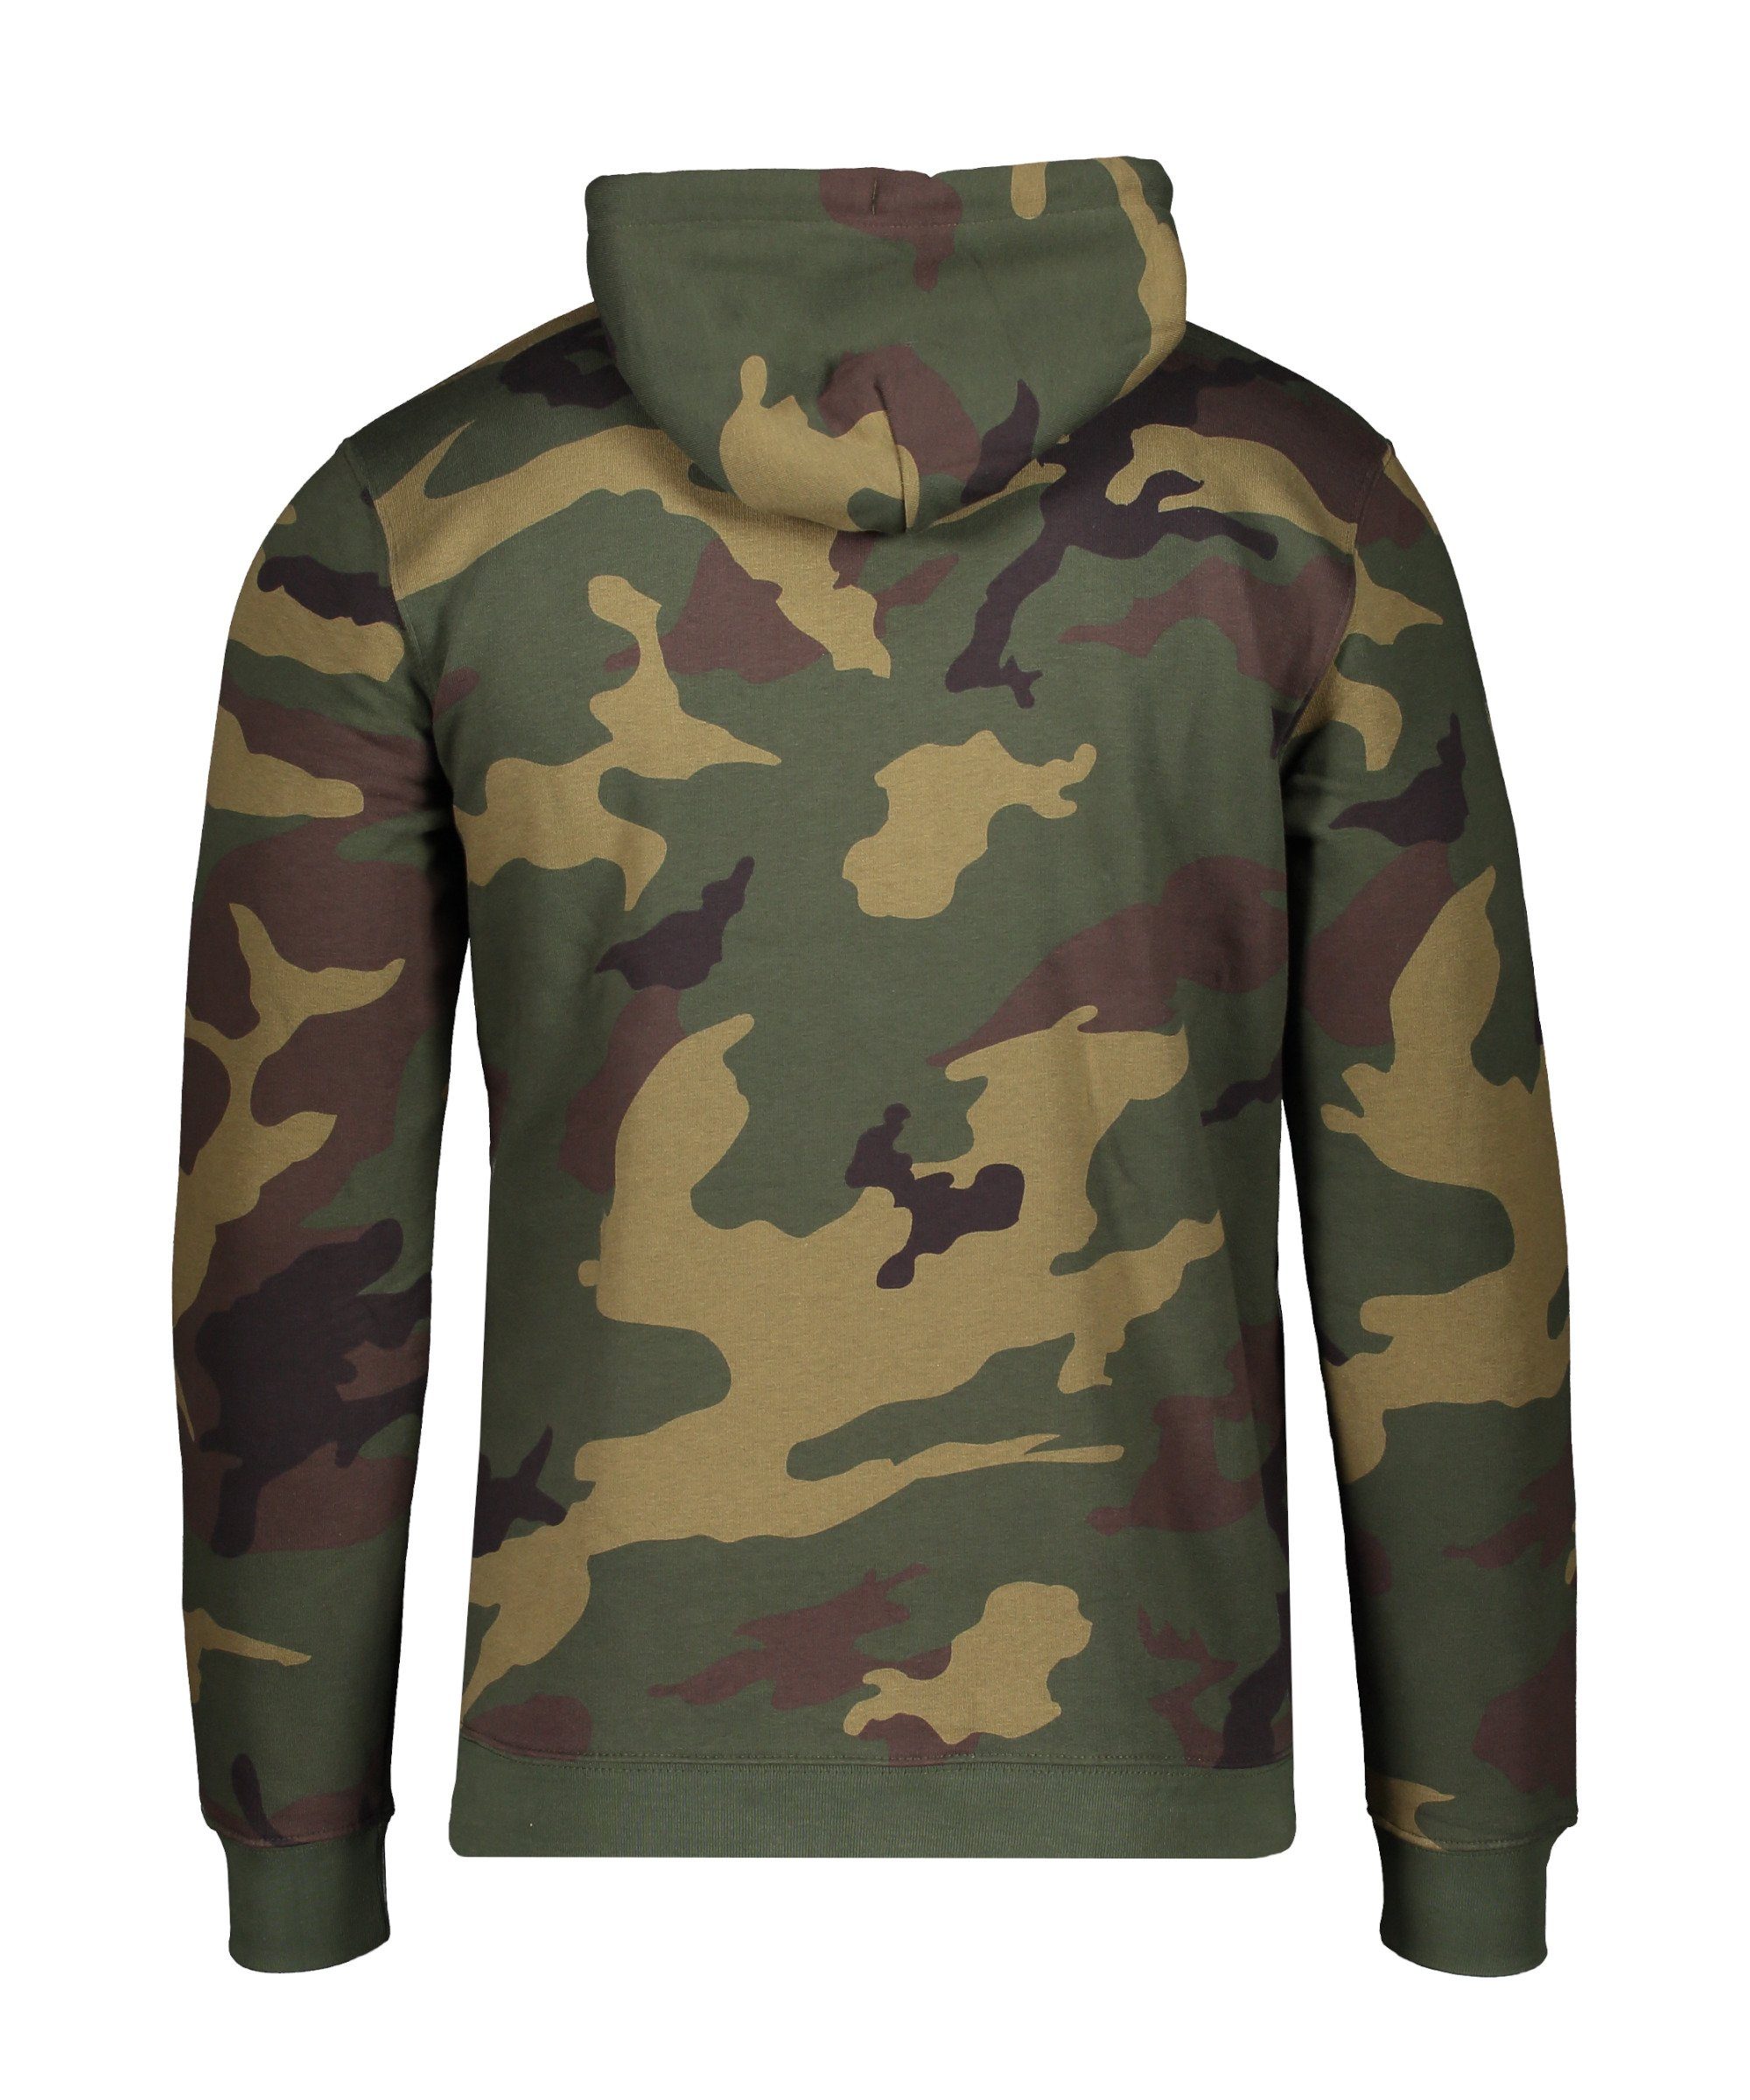 Hoody Camouflage "Naturkraft" Bolzplatzkind Sweatshirt